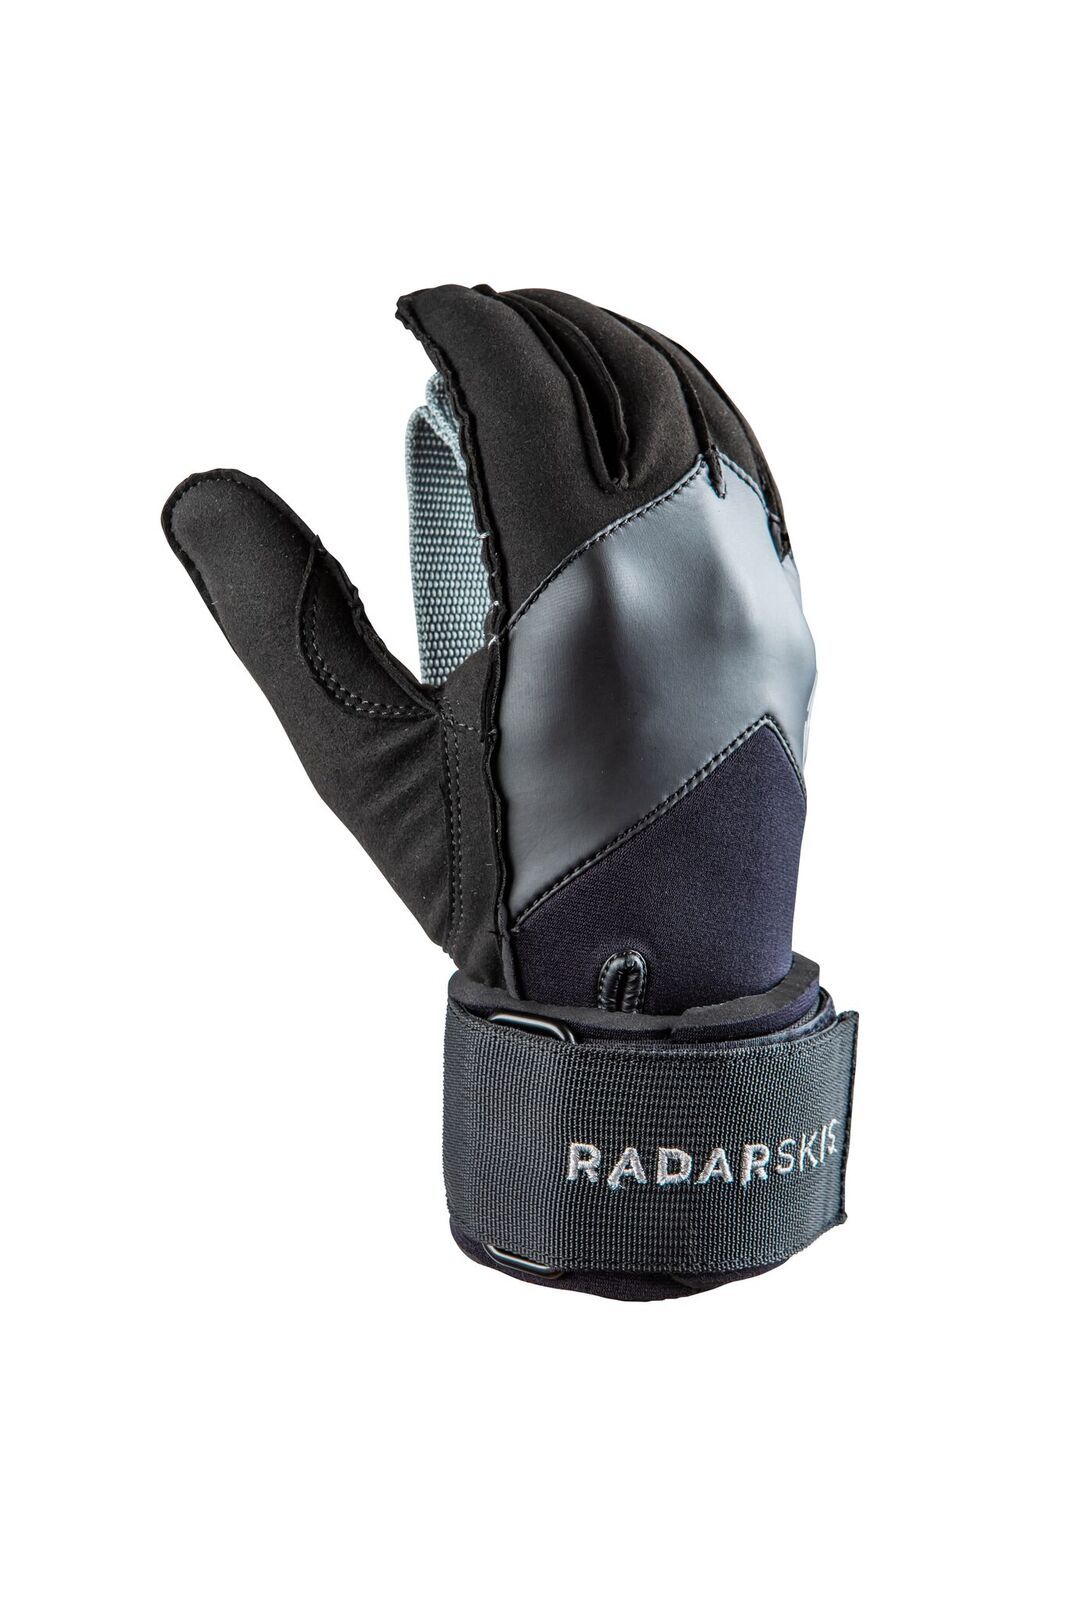 2023 Radar Vice Inside-Out Glove -Radar235030-Black-Large